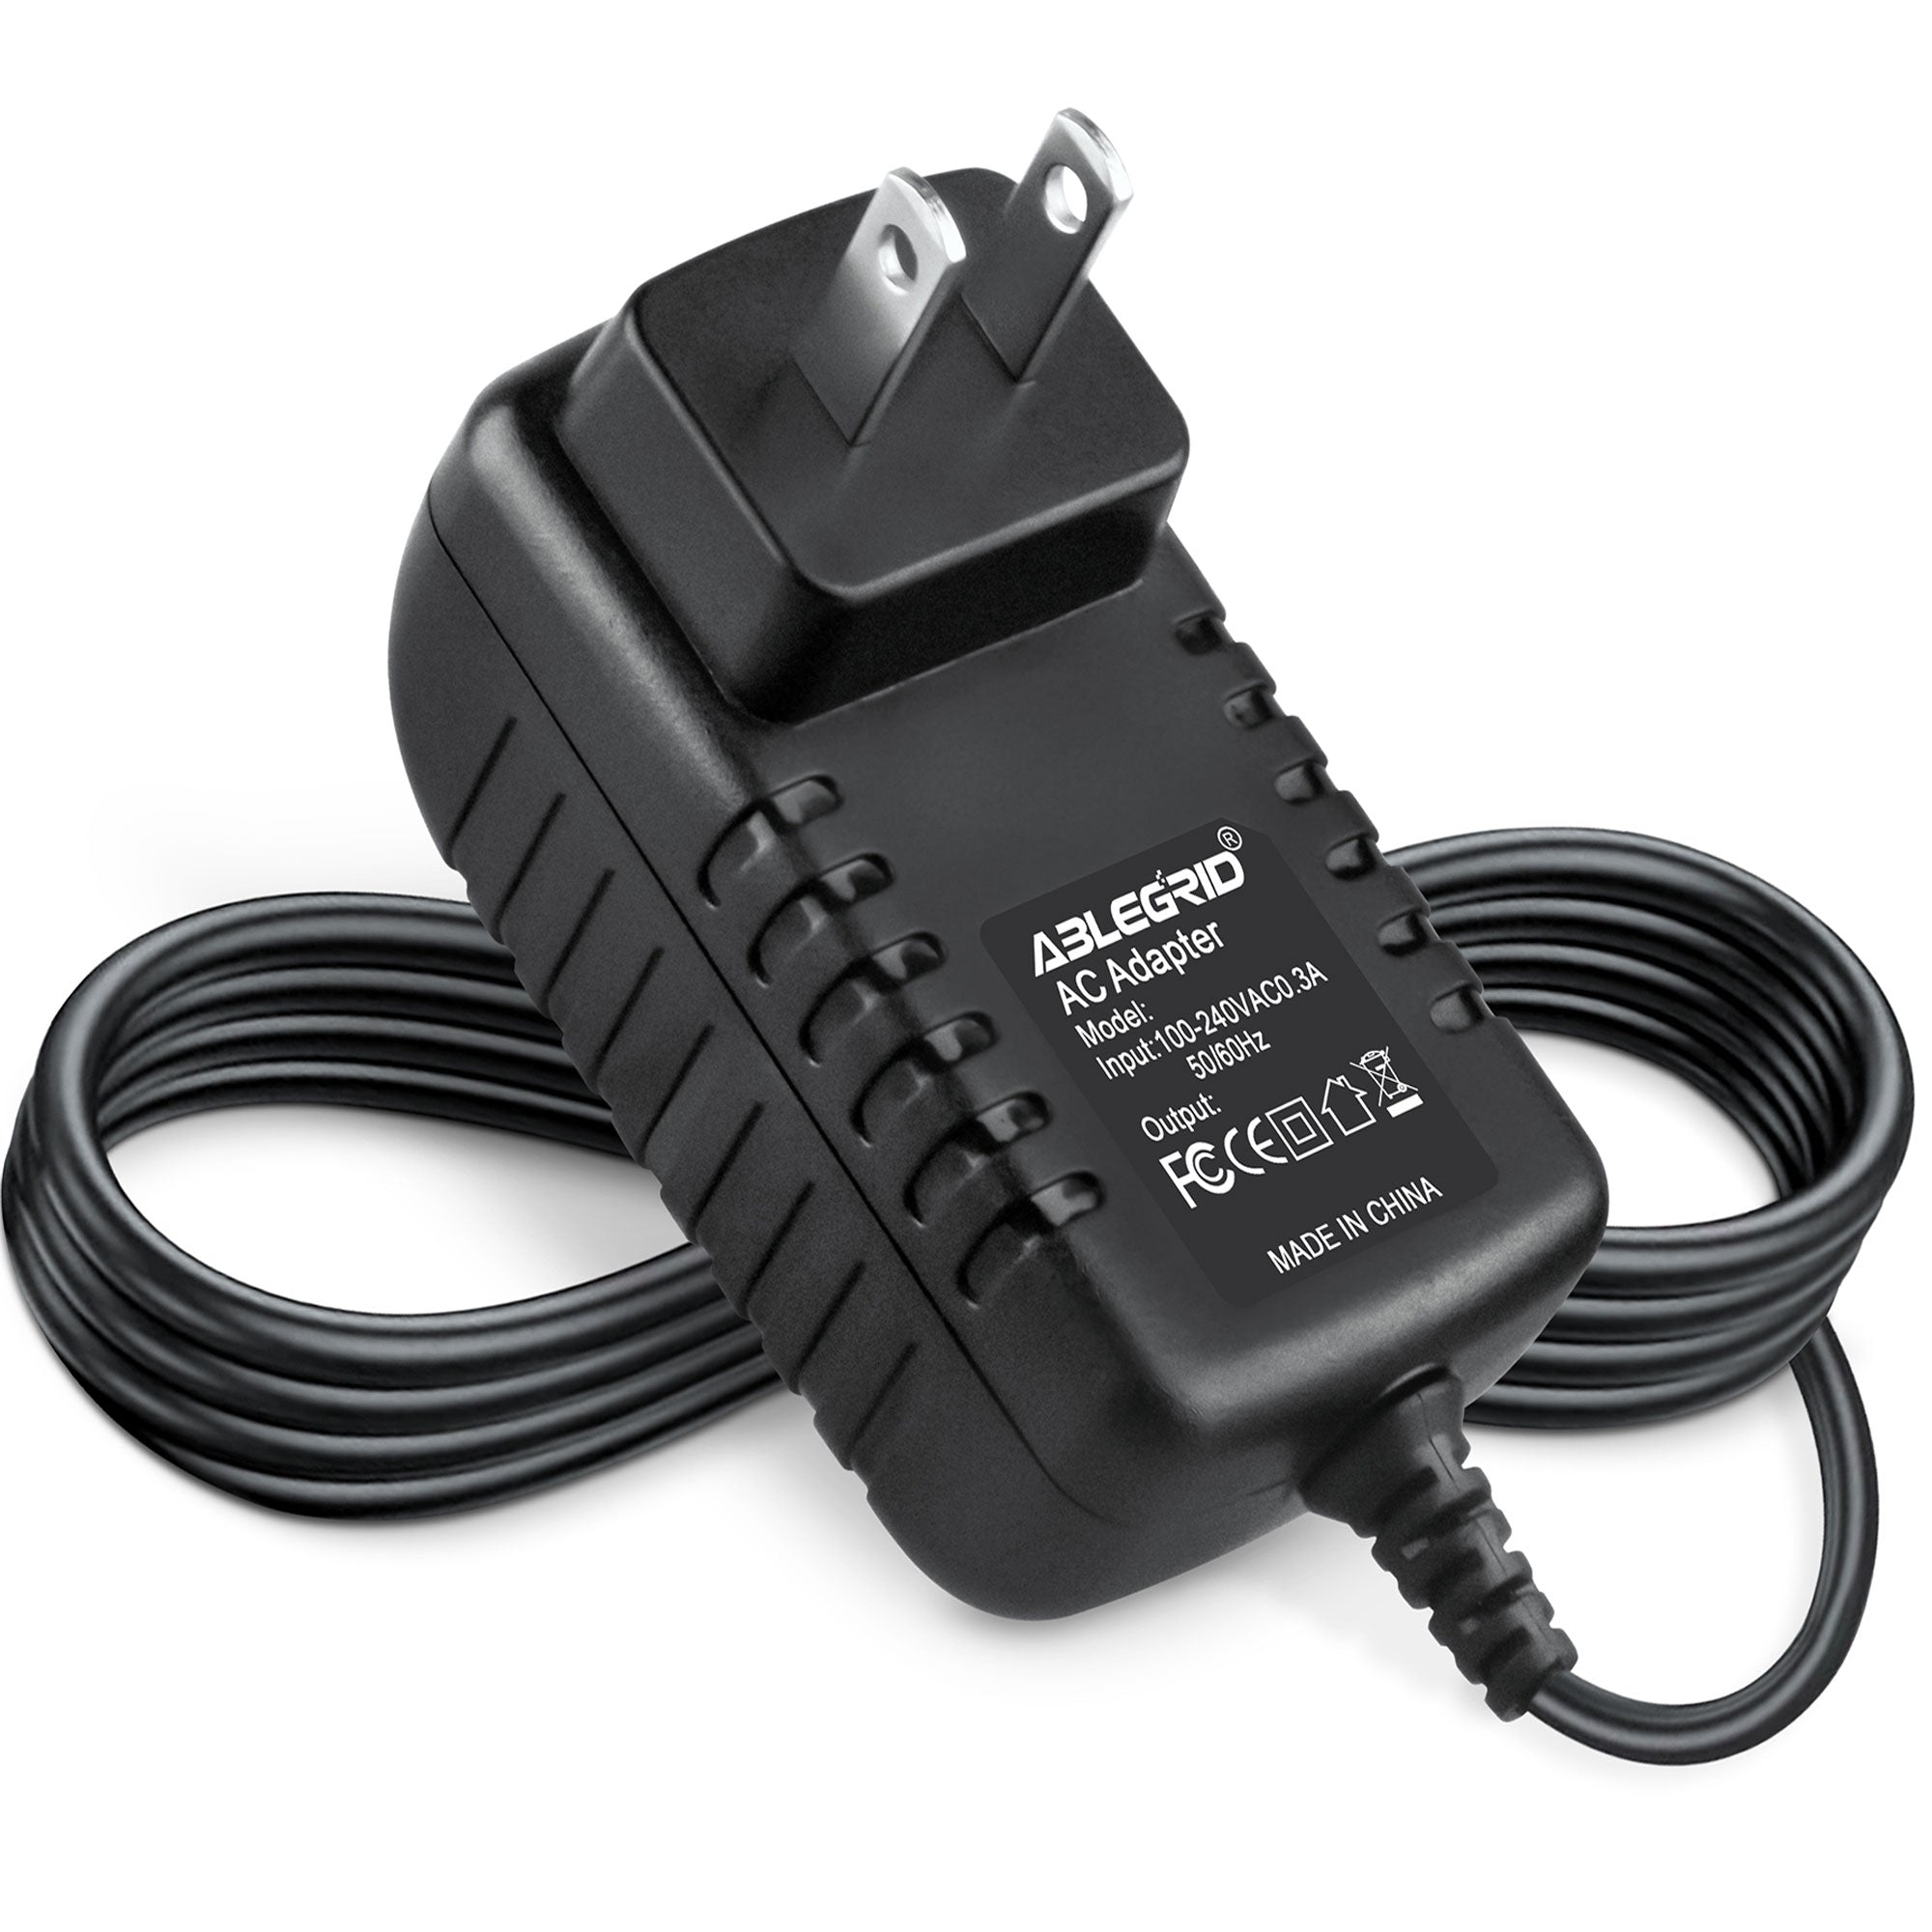 AbleGrid Power Adapter for Royal Dirt Devil Gator Hand Vacuum! DU0990-000, DA12-250US